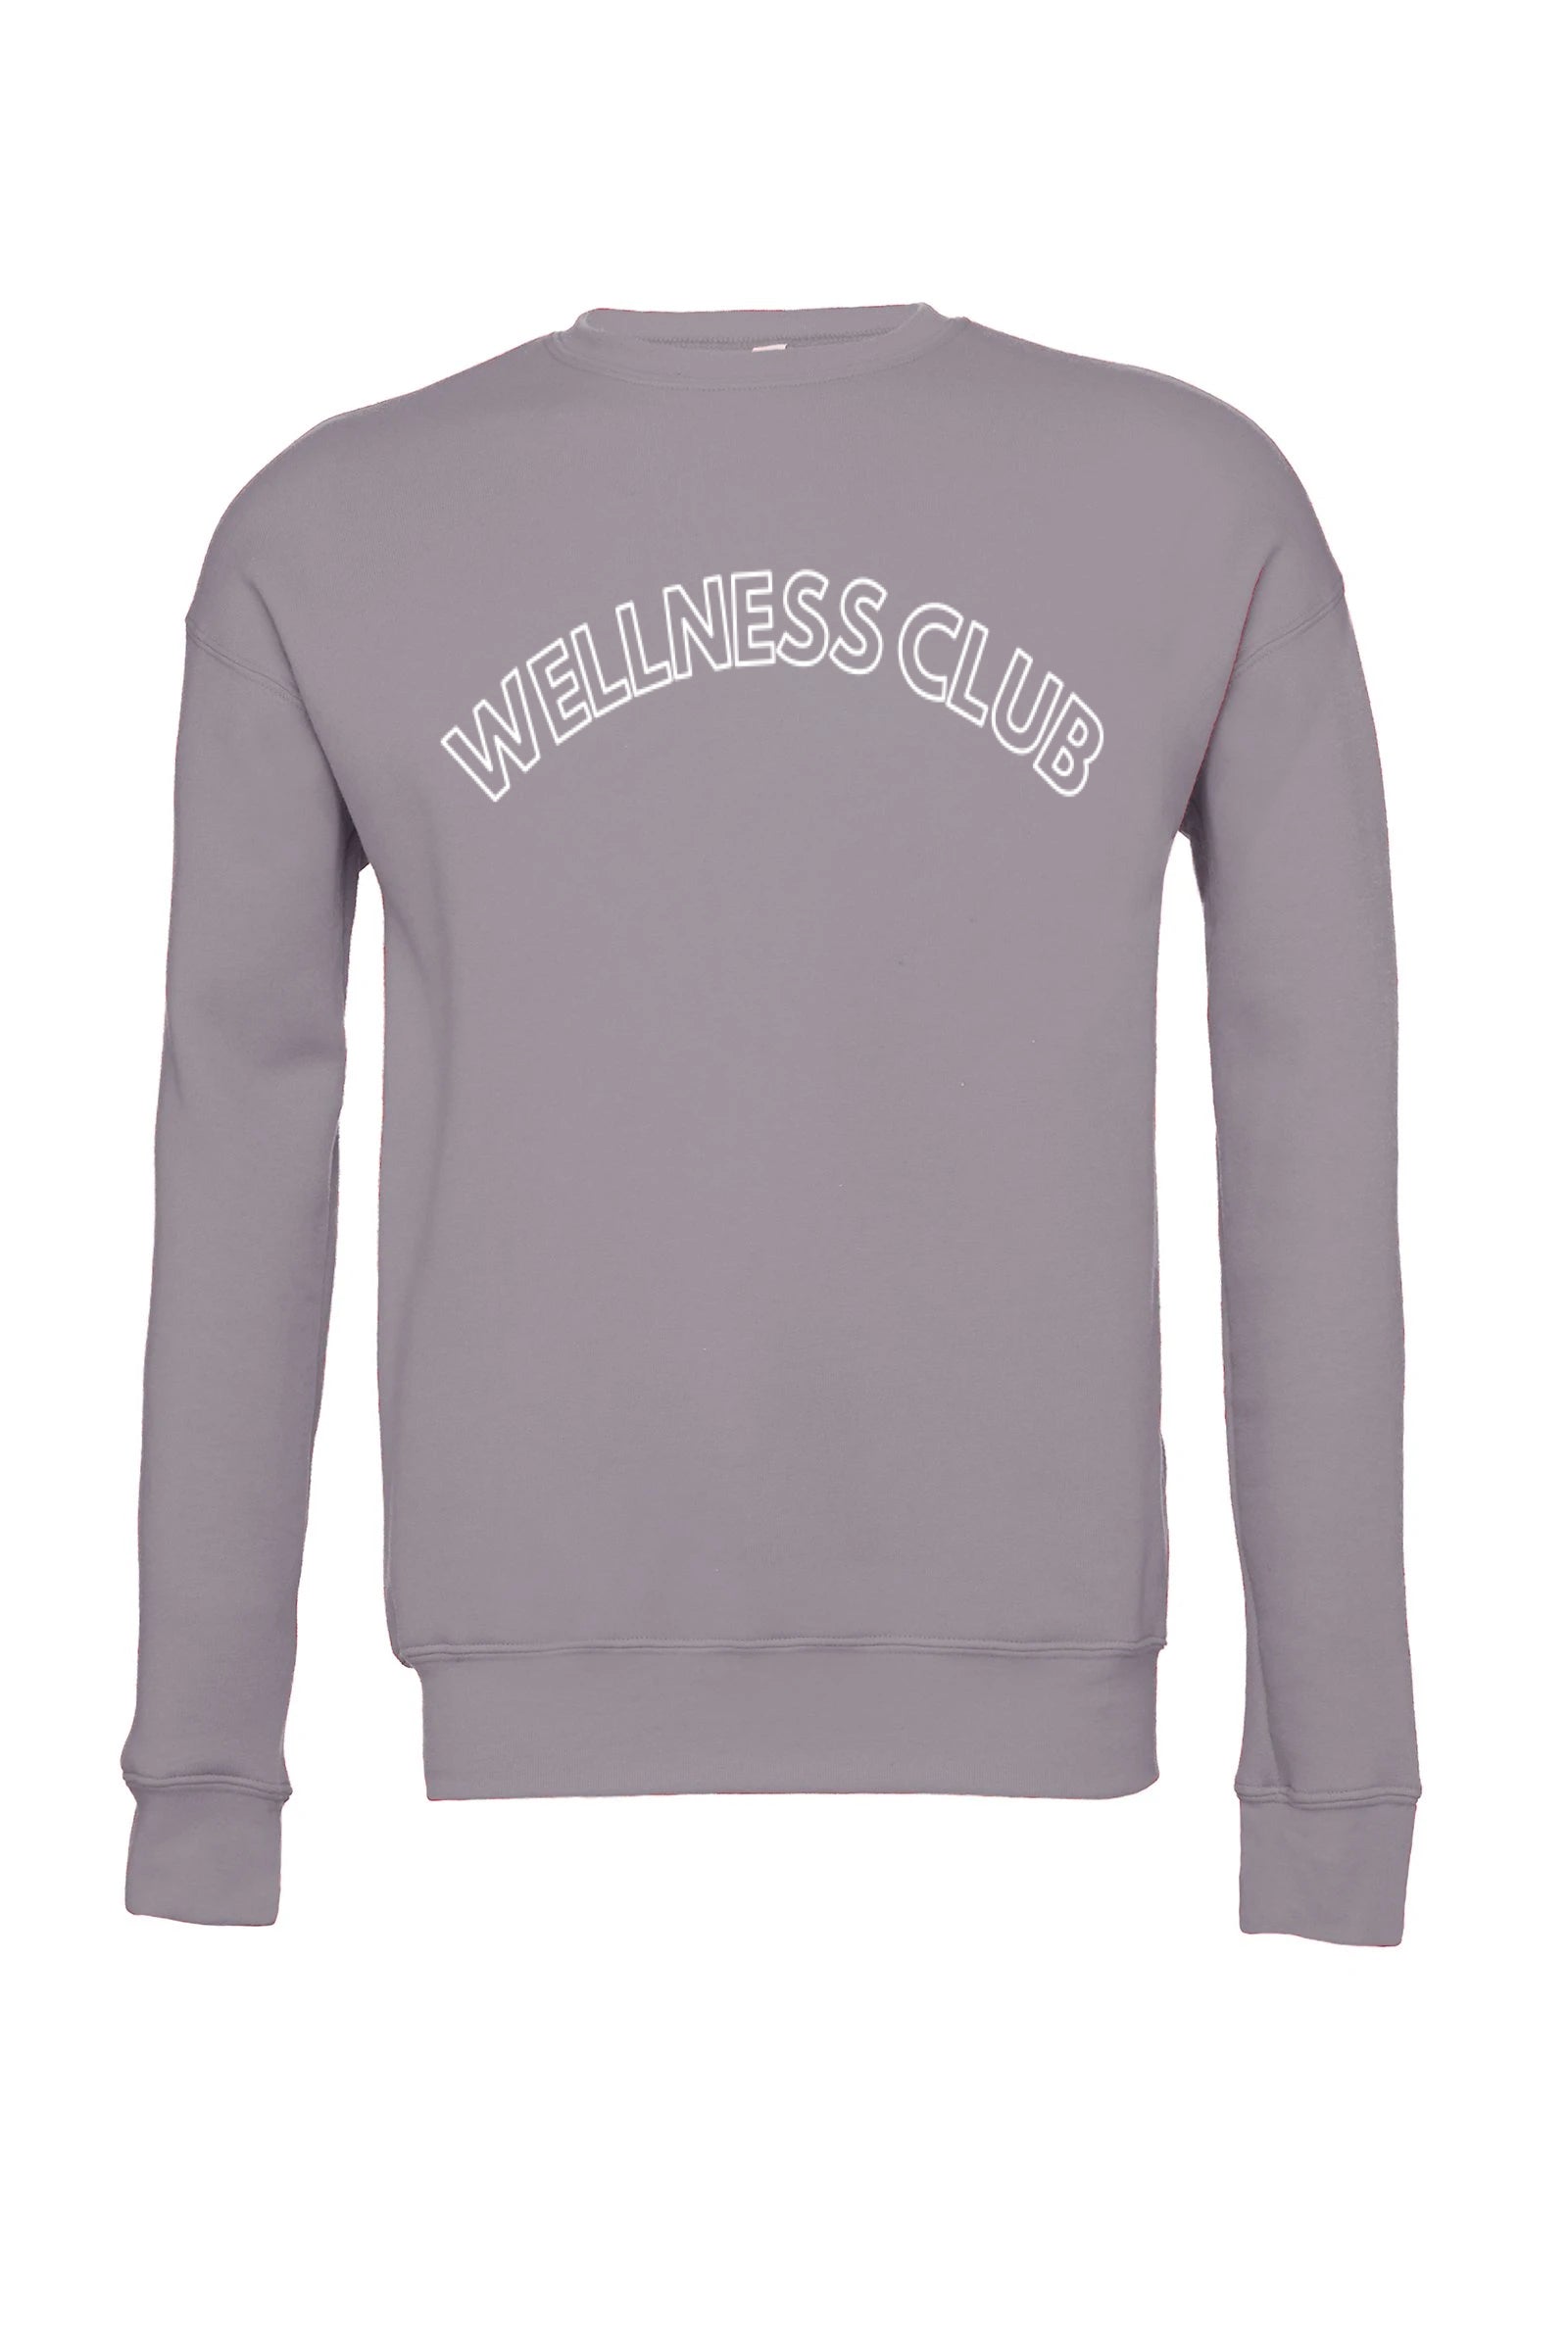 BWELL CLUB Fleece Unisex Crew “Wellness Club”